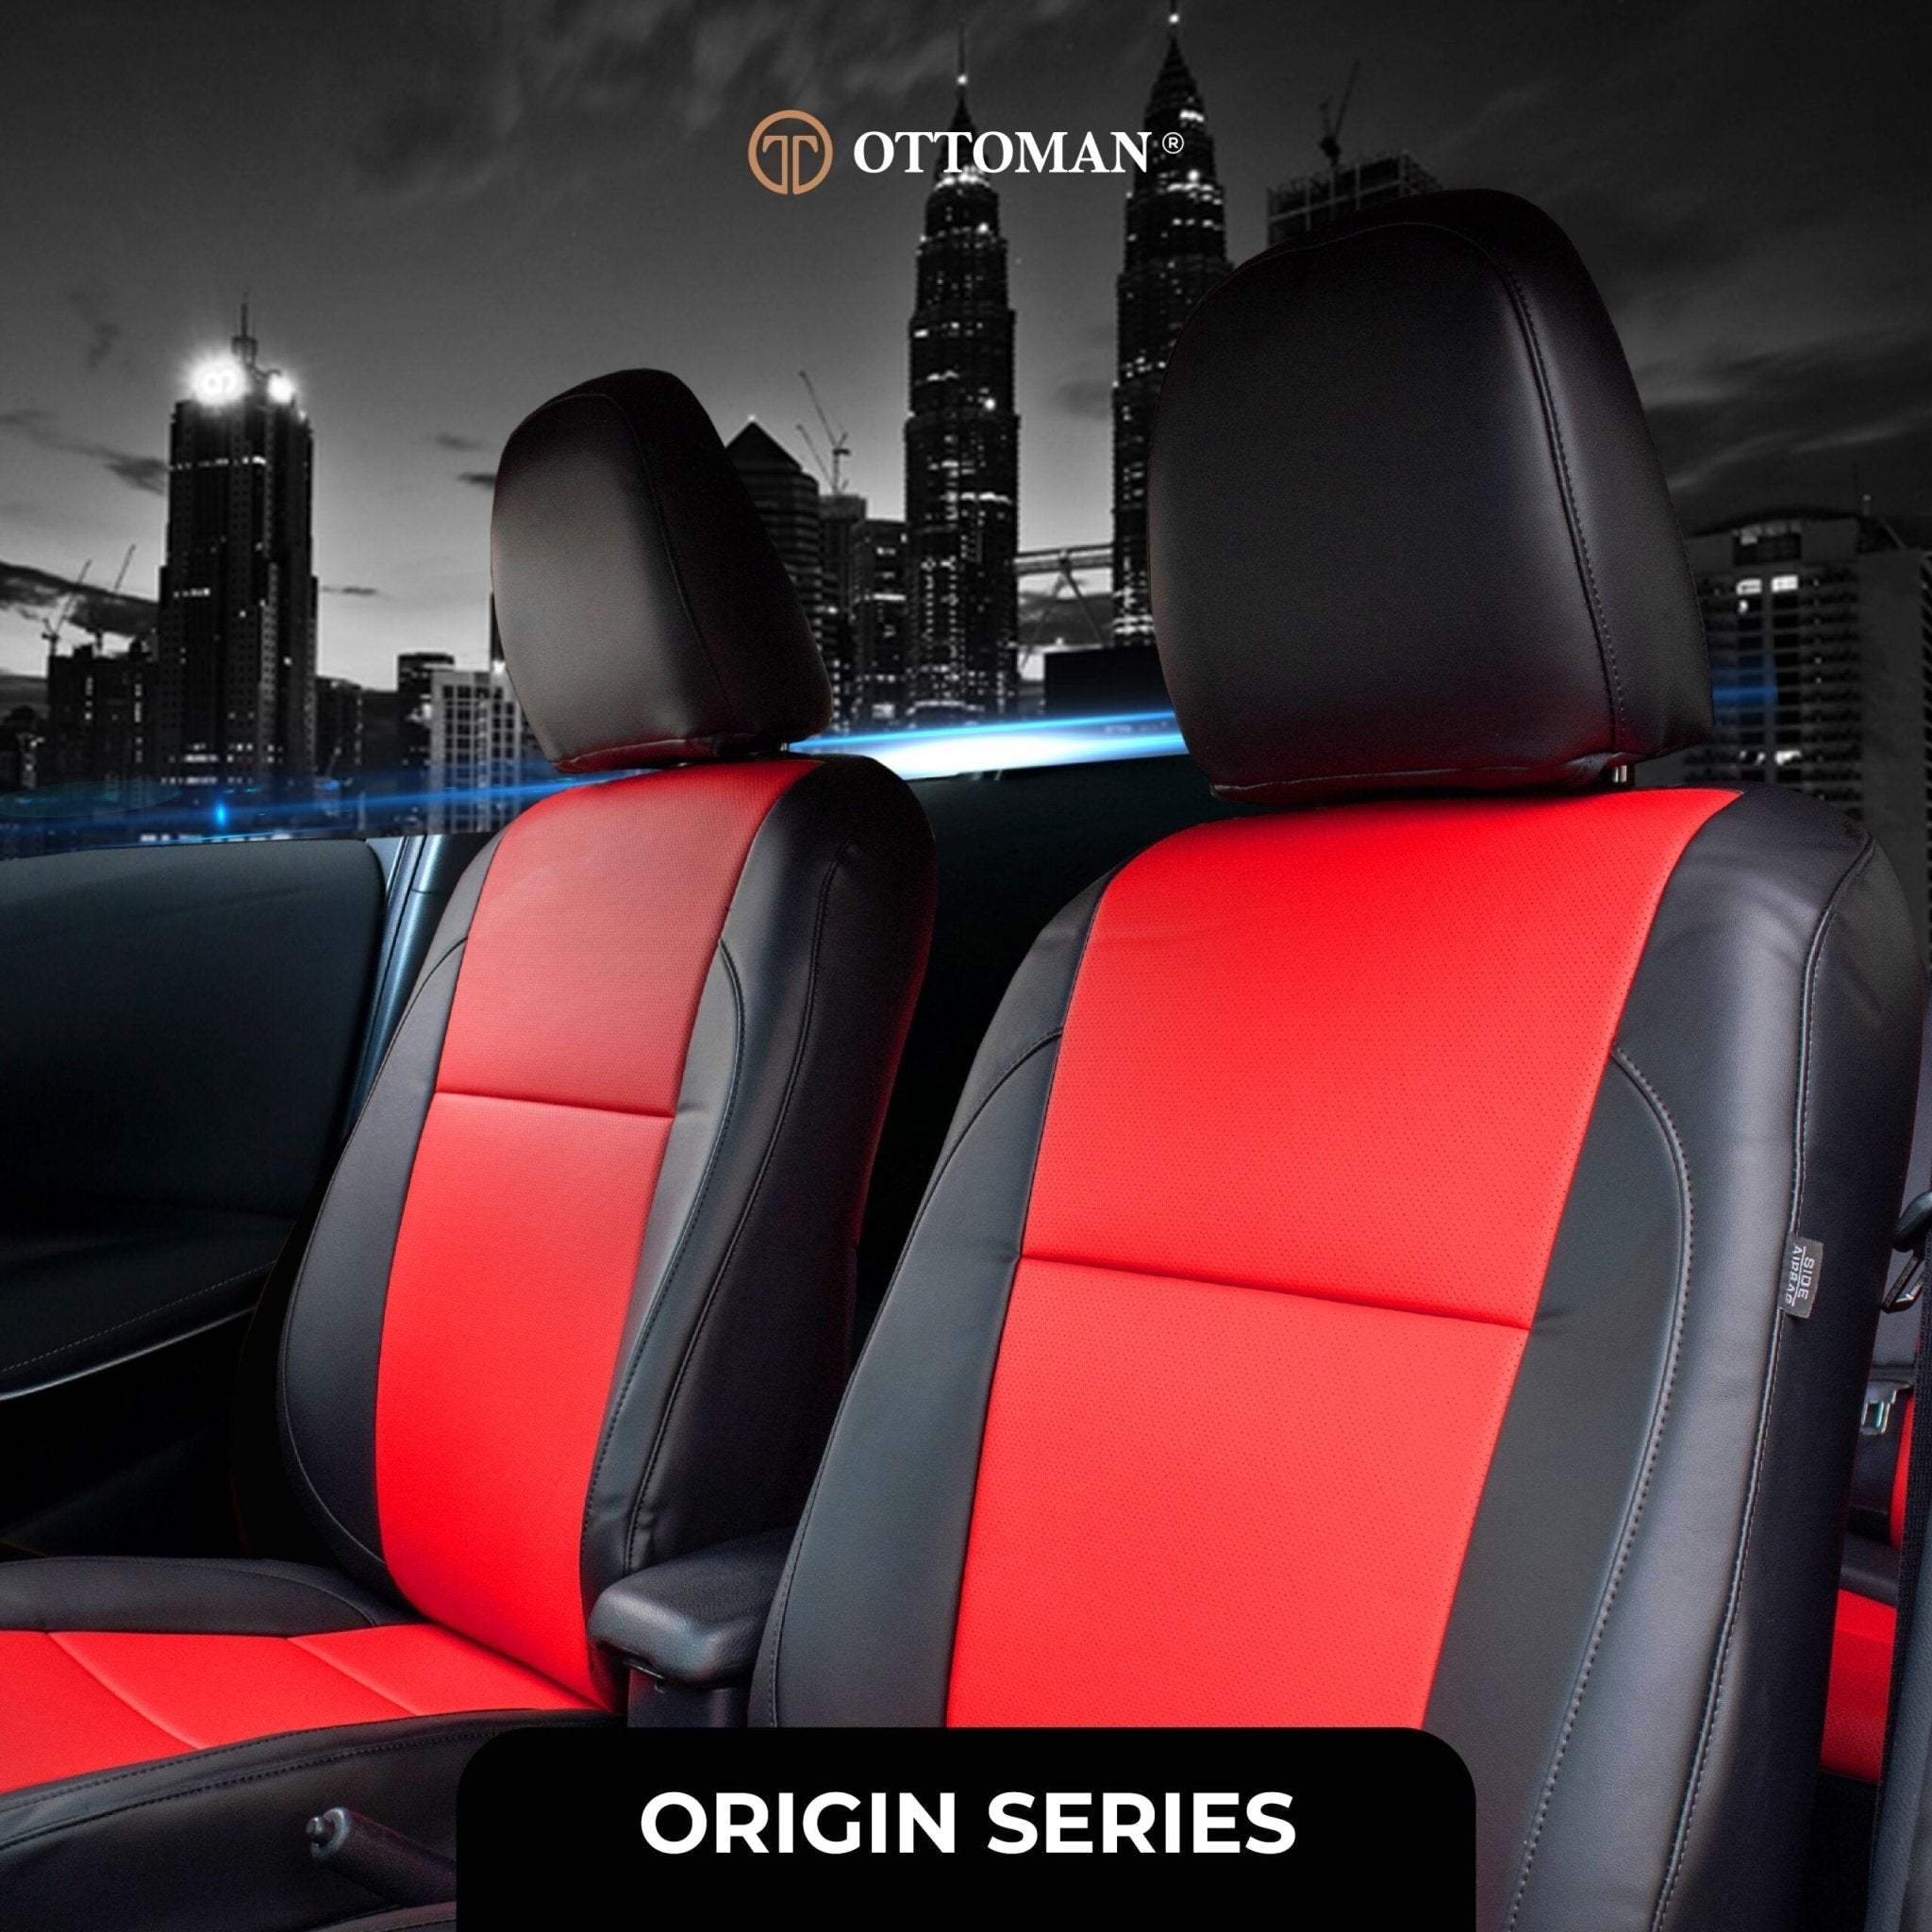 Honda Freed (2008-2016) Ottoman Seat Cover Seat Cover in Klang Selangor, Penang, Johor Bahru - Ottoman Car Mats